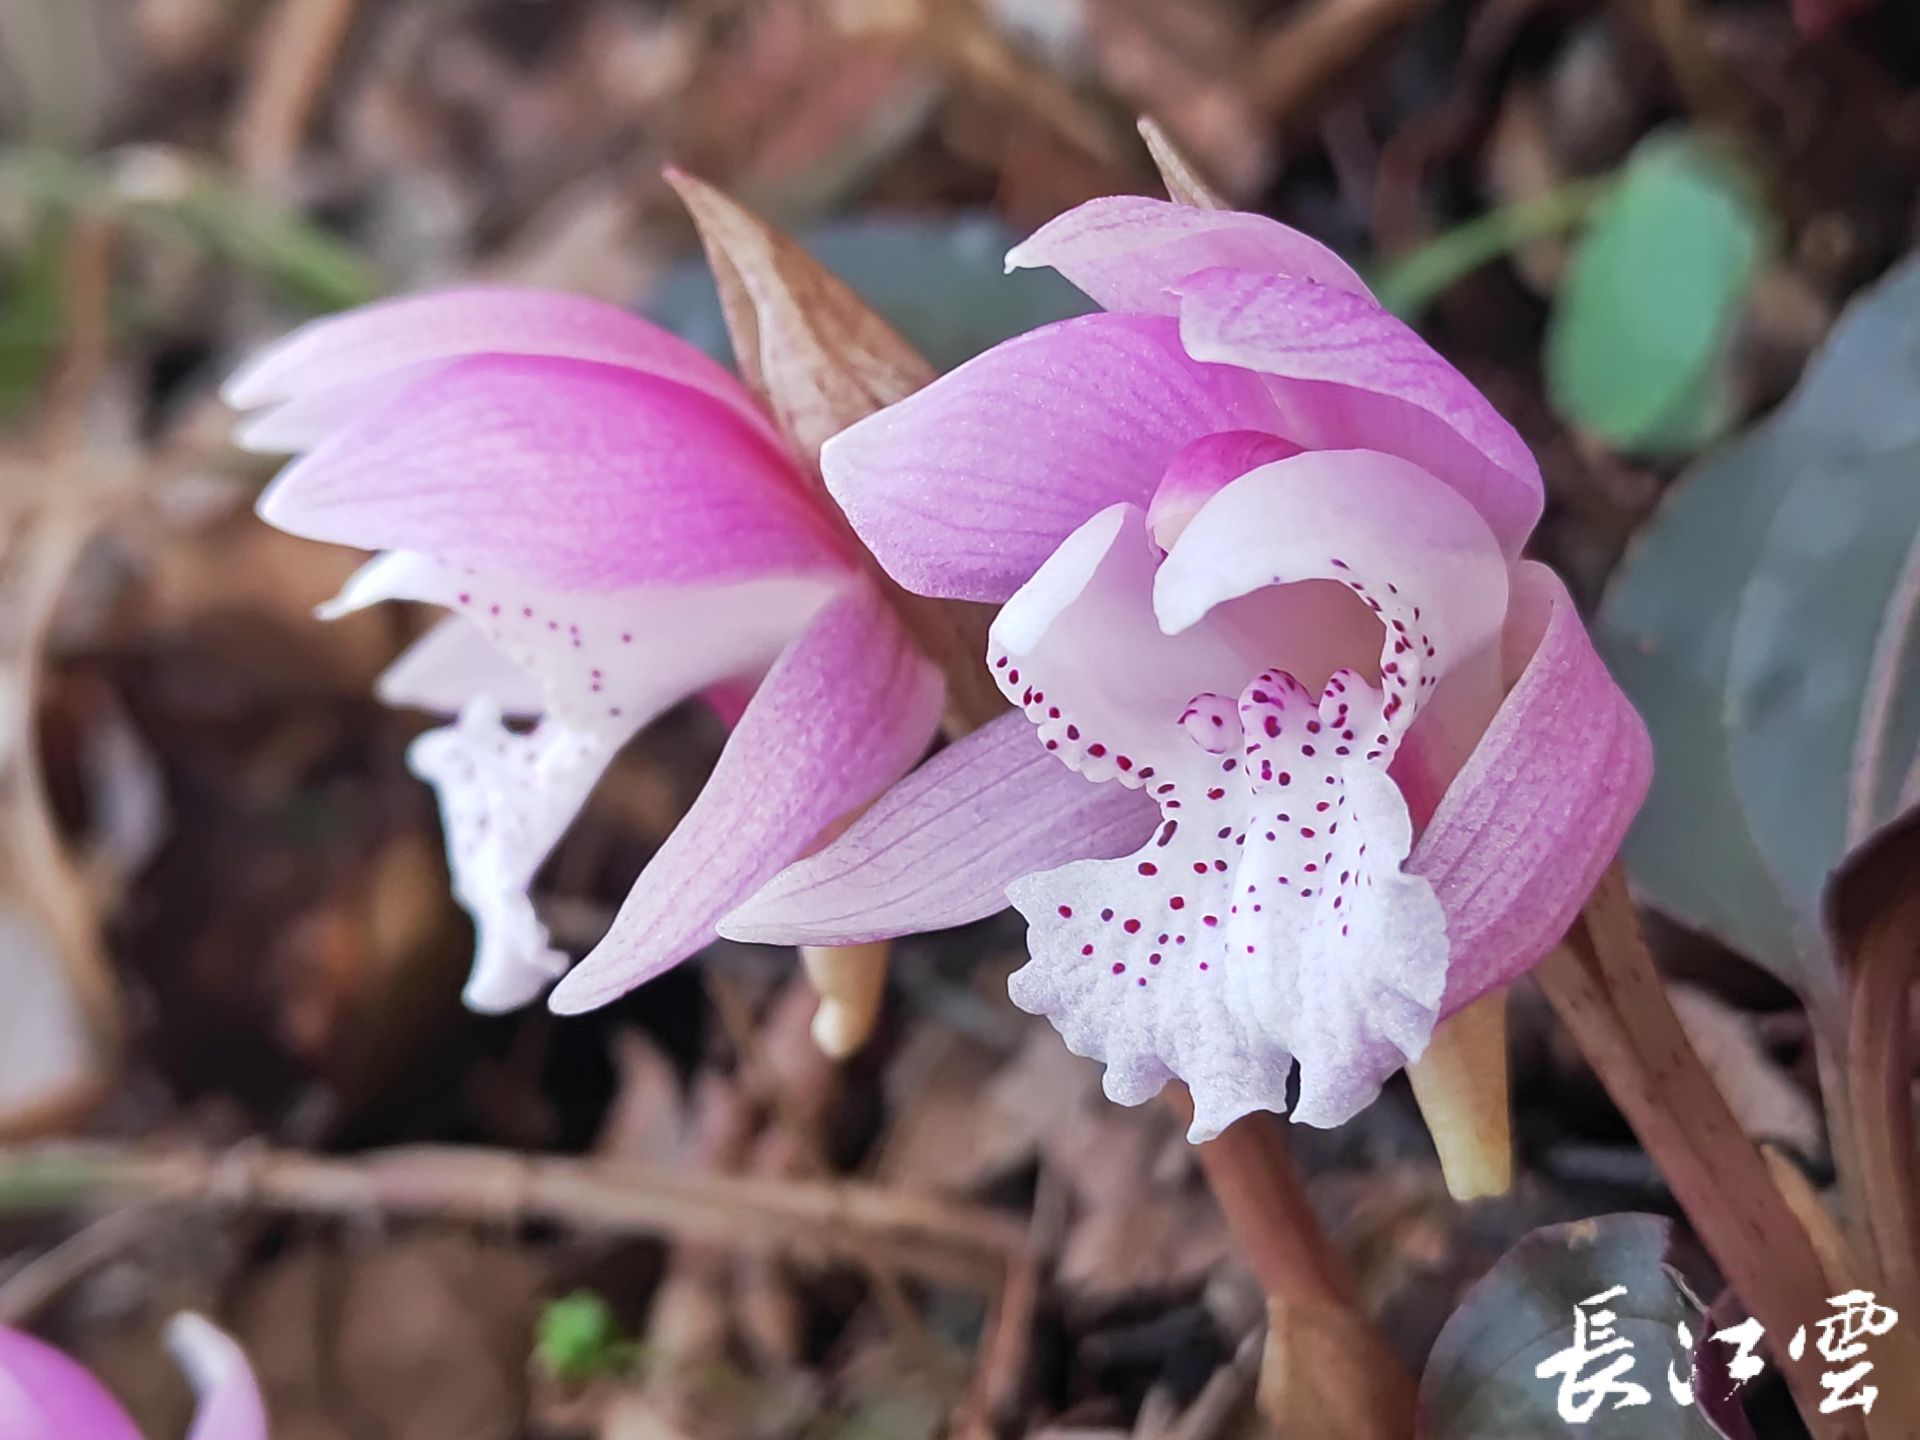 独花兰拉丁学名:changnienia amoena,兰科(orchidaceae)独花兰属